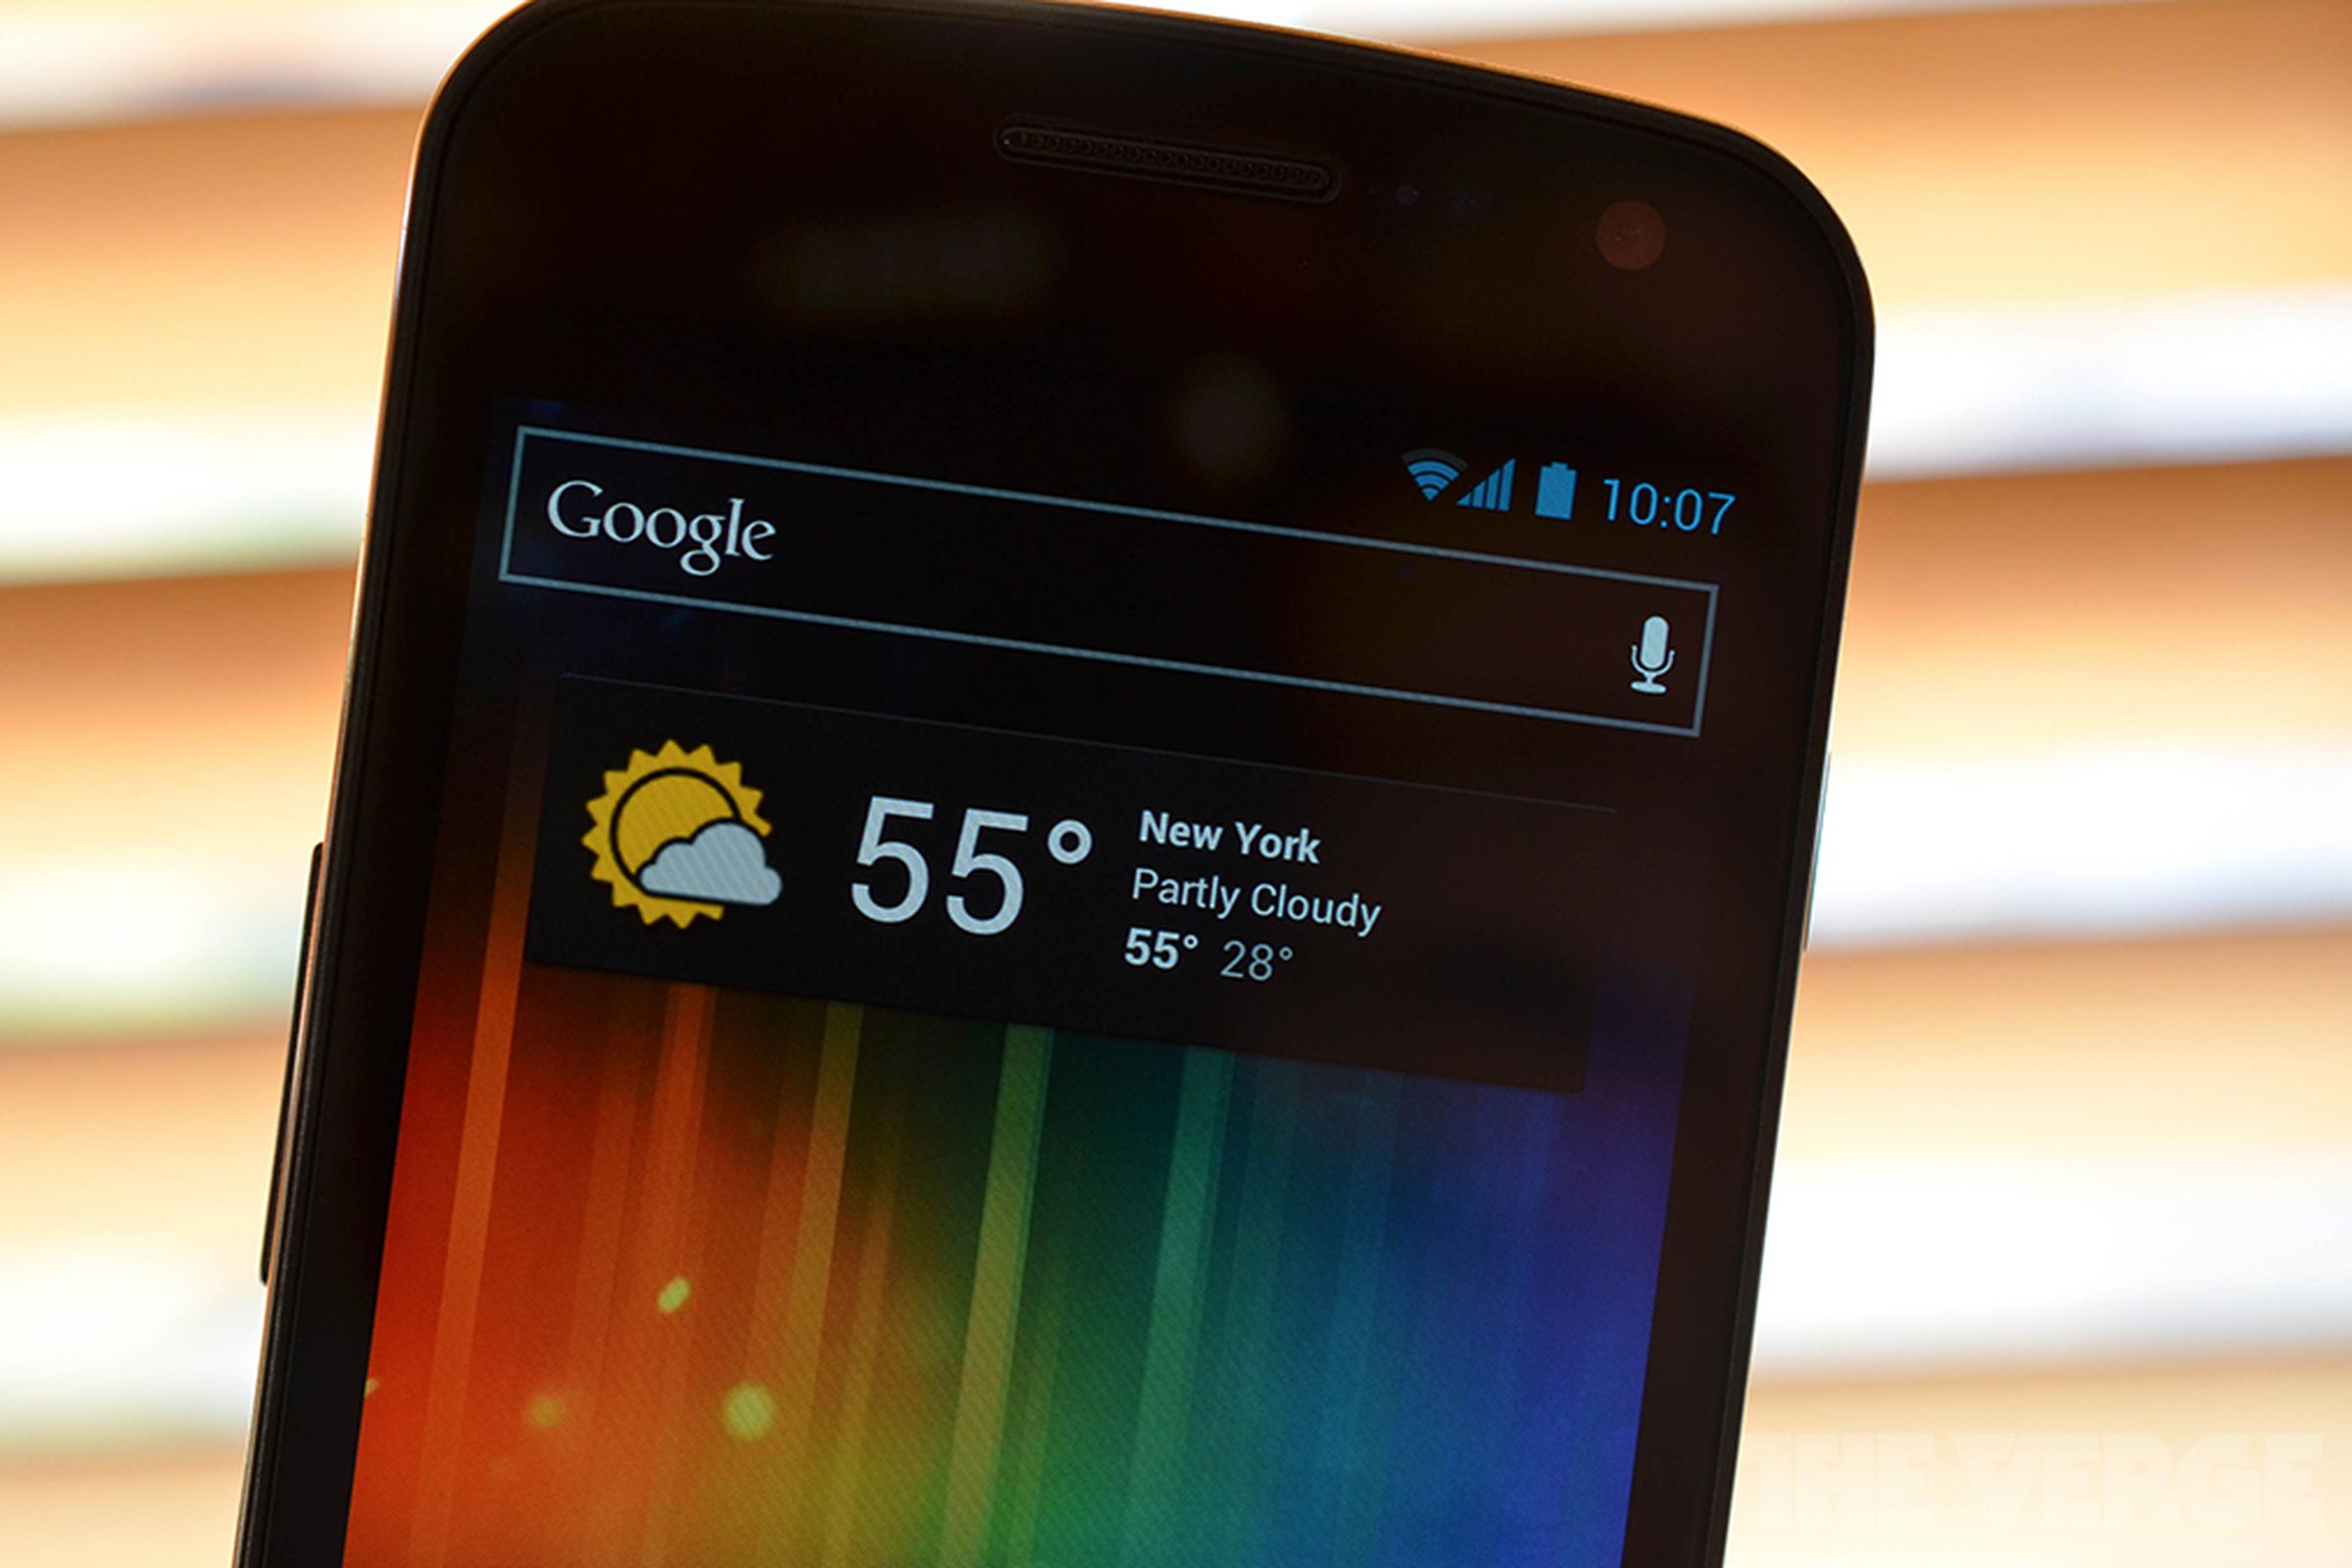 Galaxy Nexus Android 4